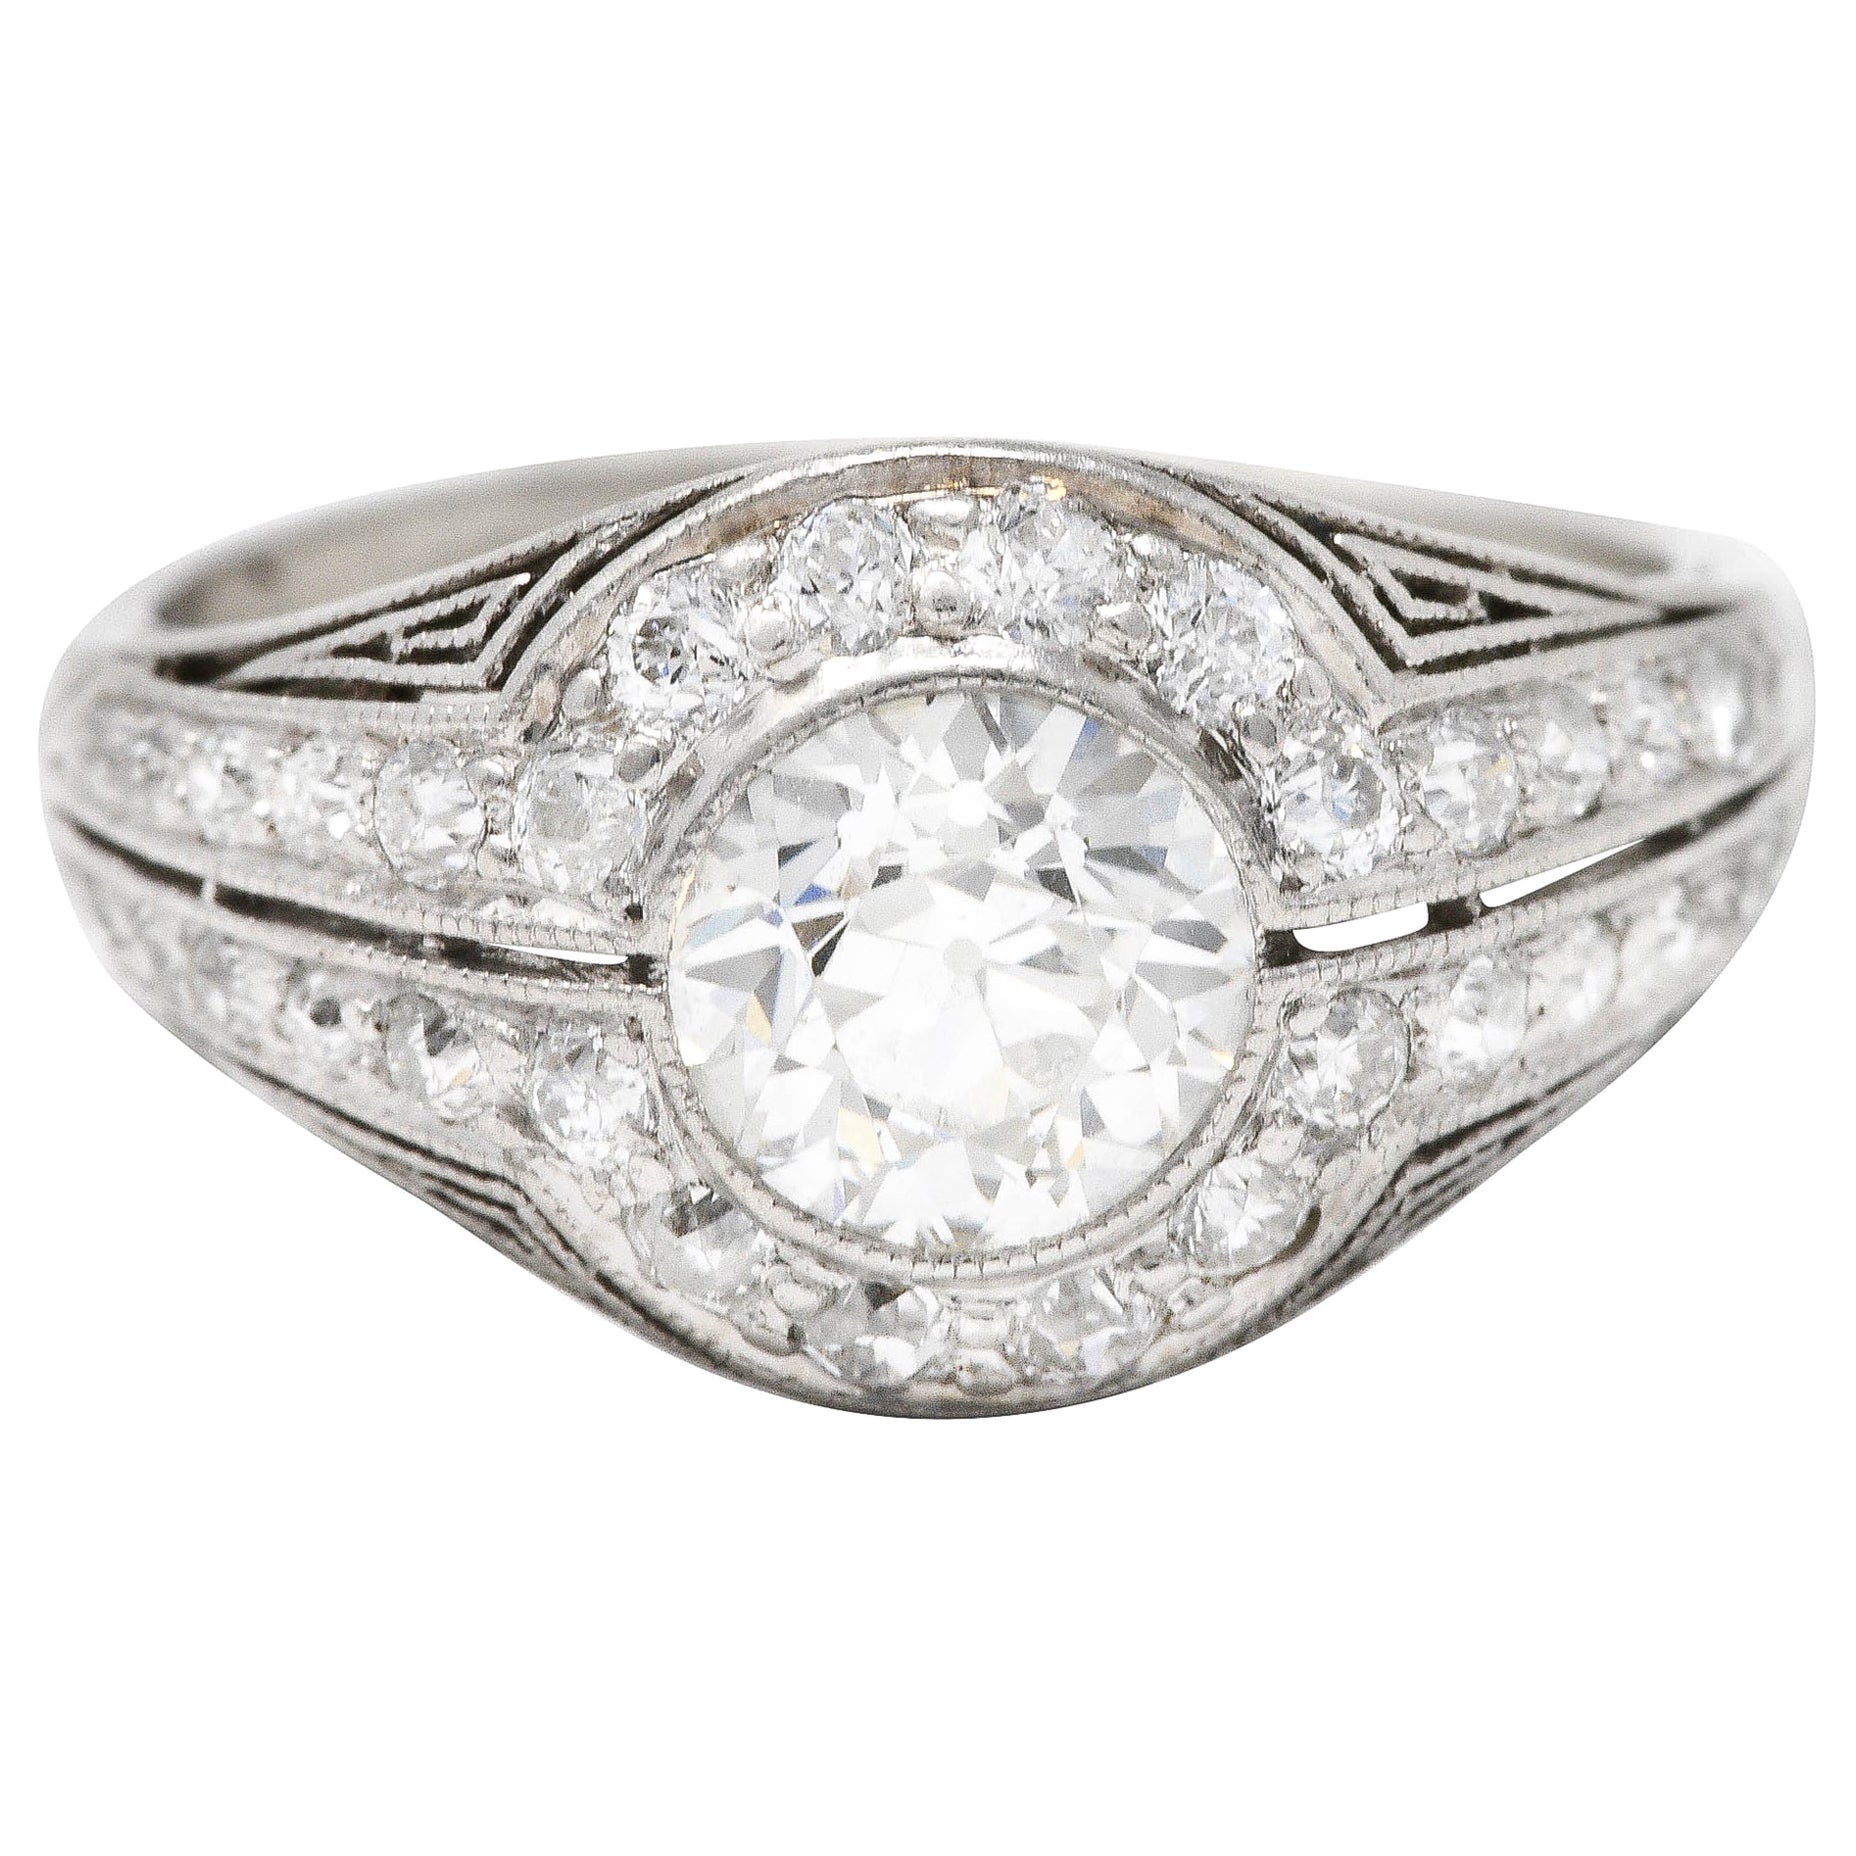 J.E. Caldwell 1.35 Carats Diamond Platinum Bombe Engagement Ring